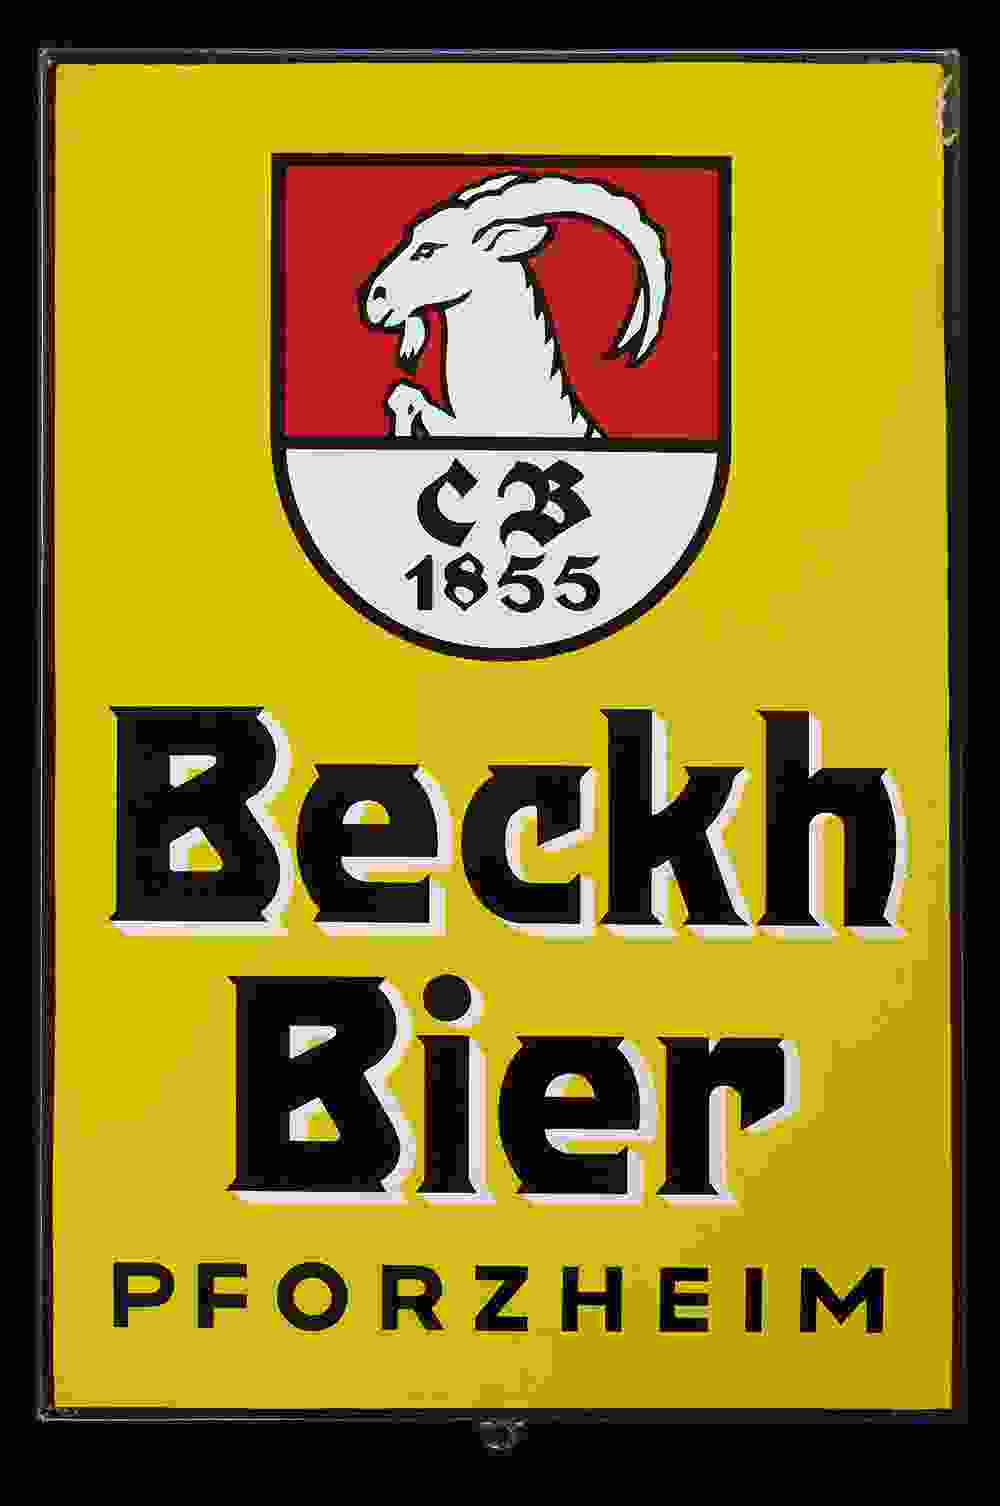 Beckh Bier 